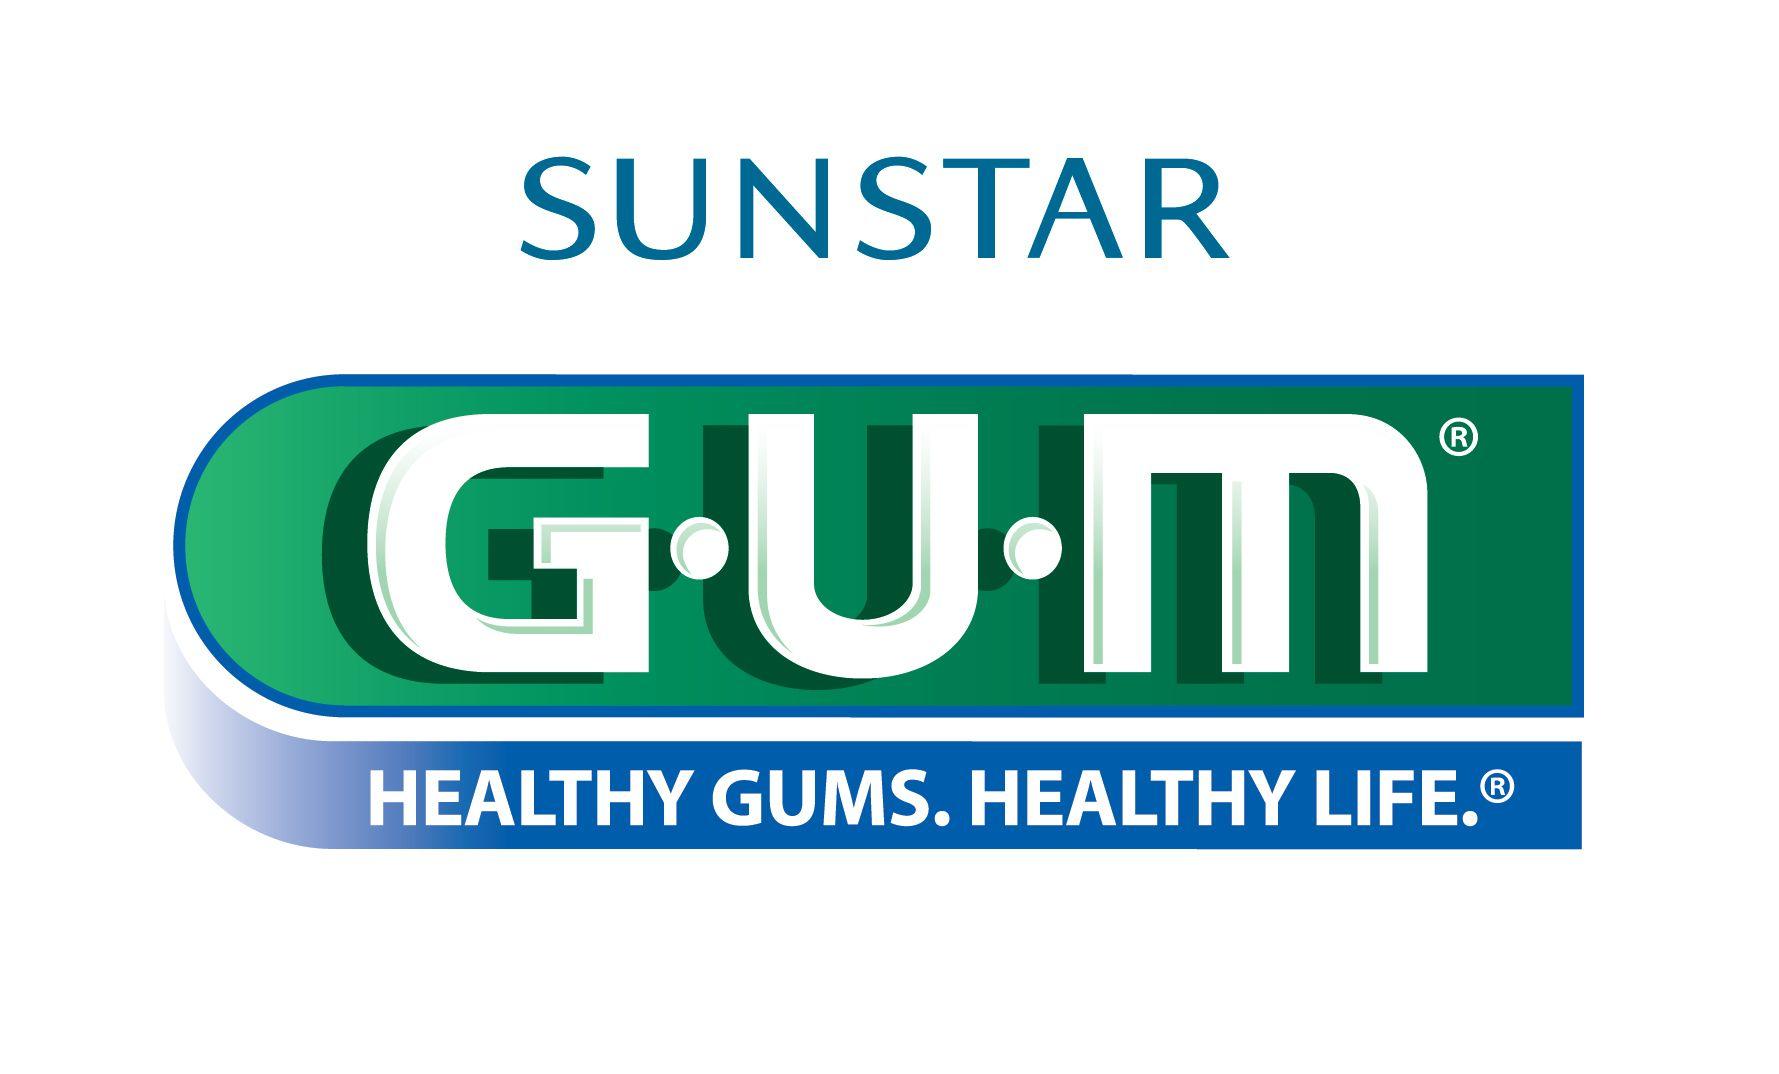 Gum Logo - Image - GUM logo.jpg | Logopedia | FANDOM powered by Wikia